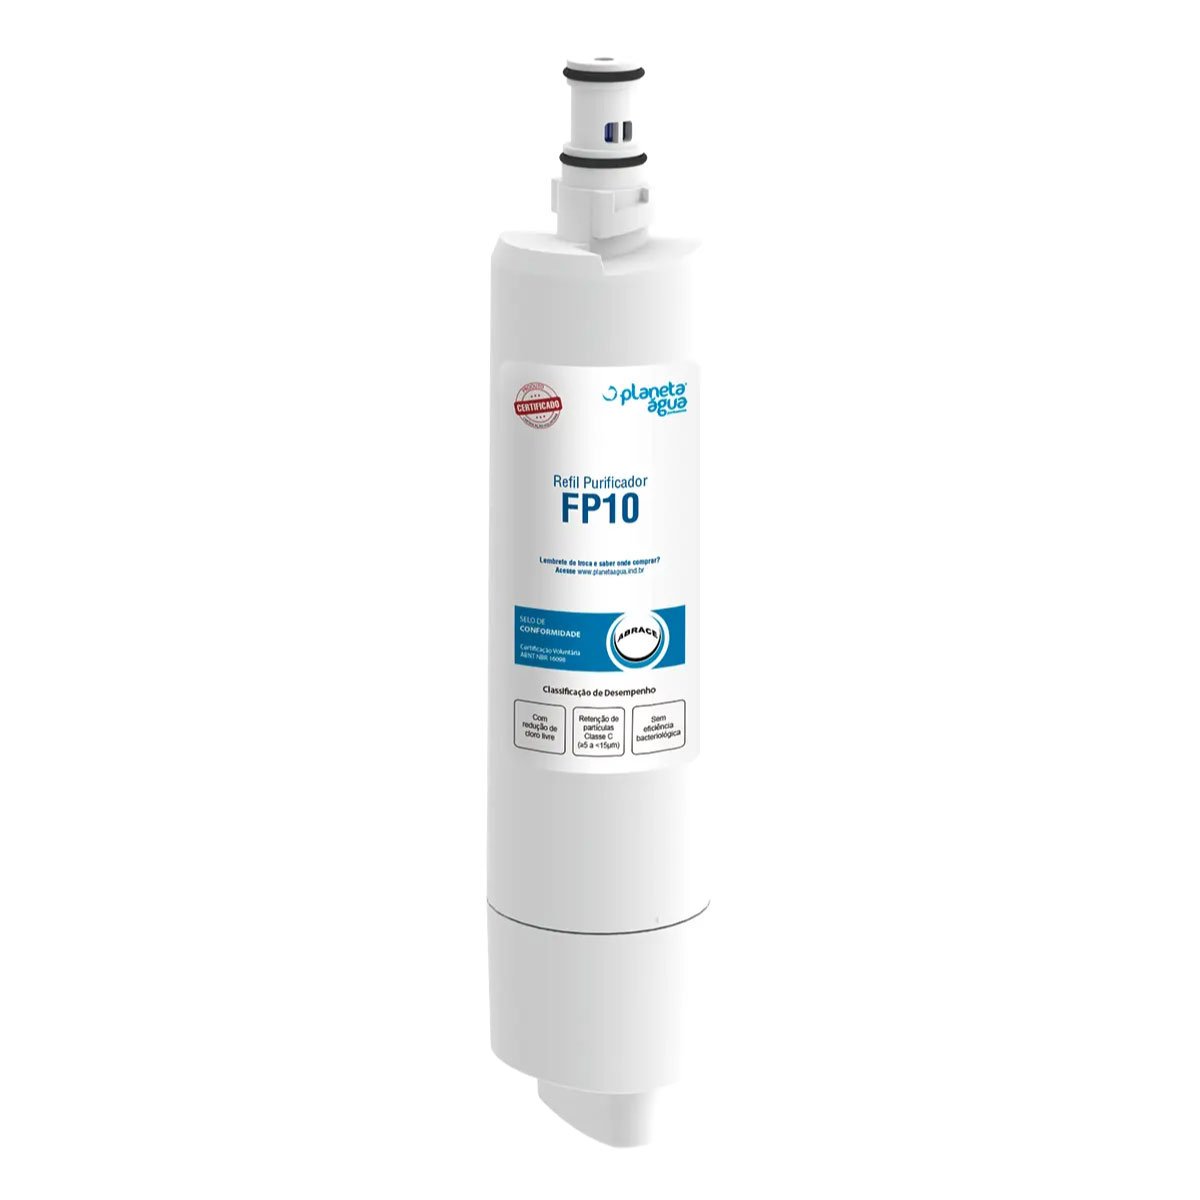 Refil Filtro Fp10 para Purificador Consul Planeta Água - 1